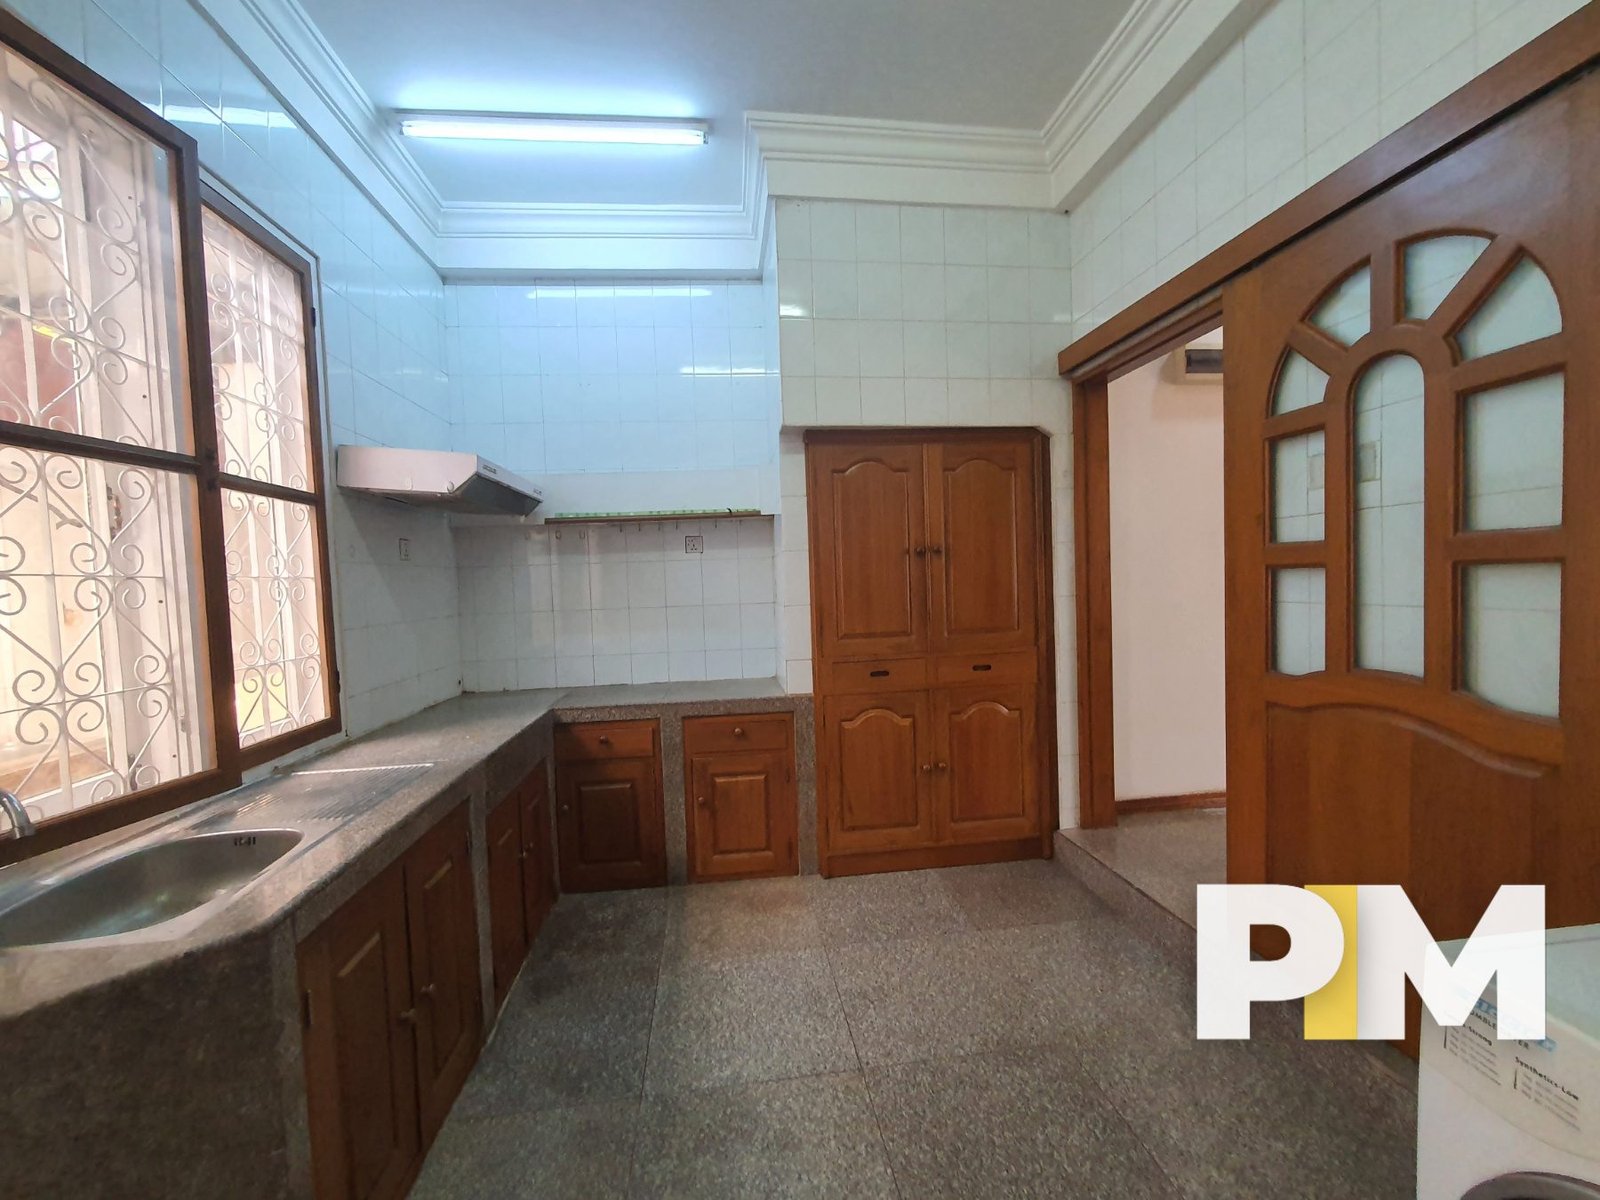 Kitchen Room - Yangon Real Estate